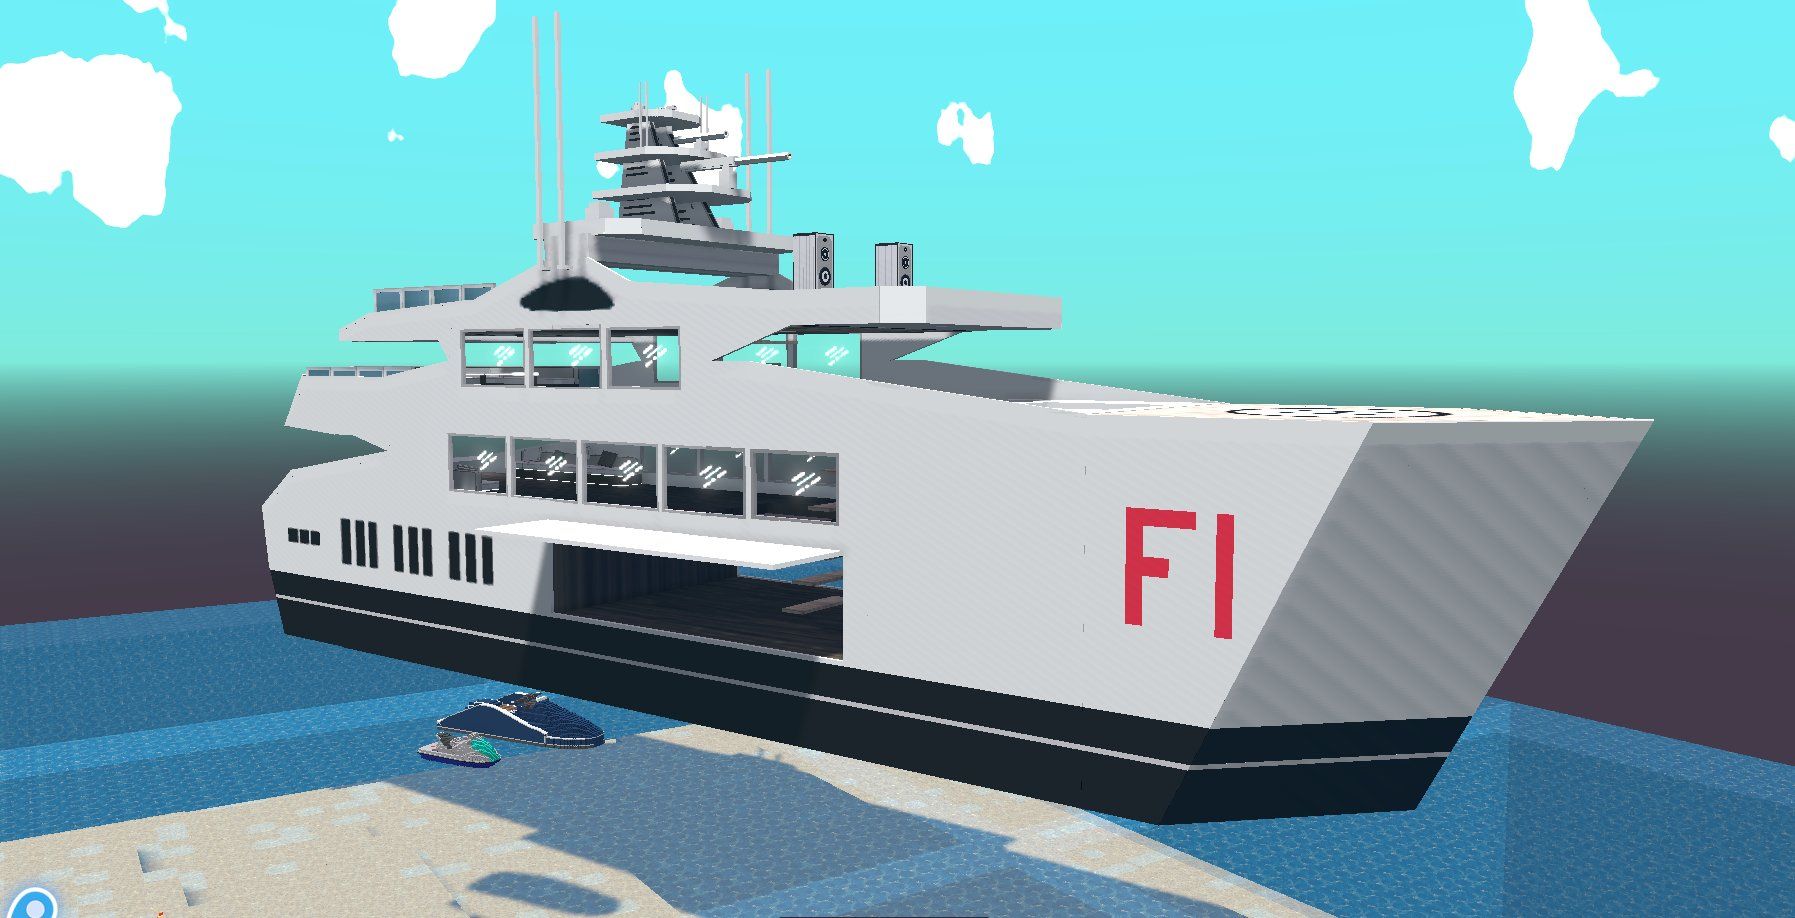 The Metaflower NFT Super Mega Yacht